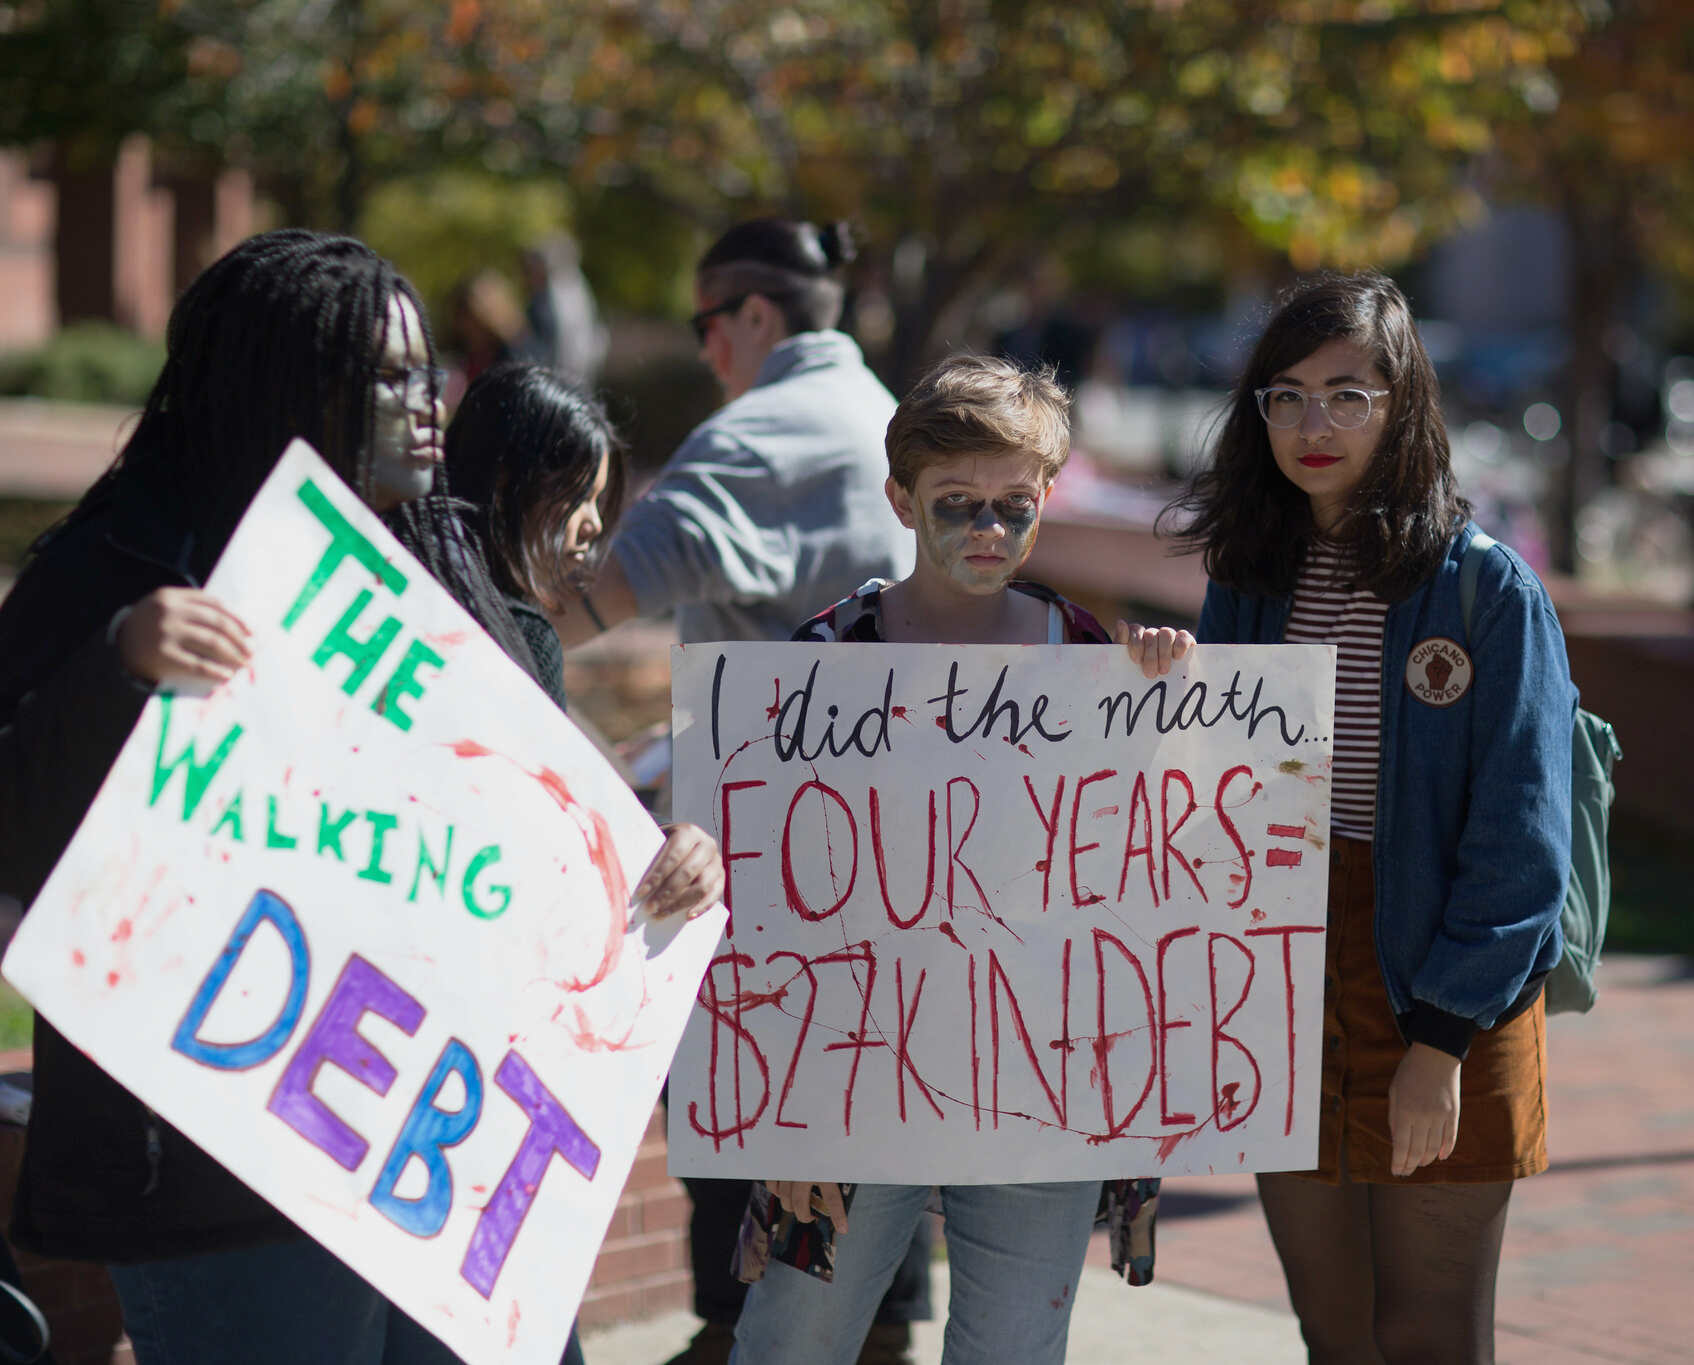 Student Debt Protest